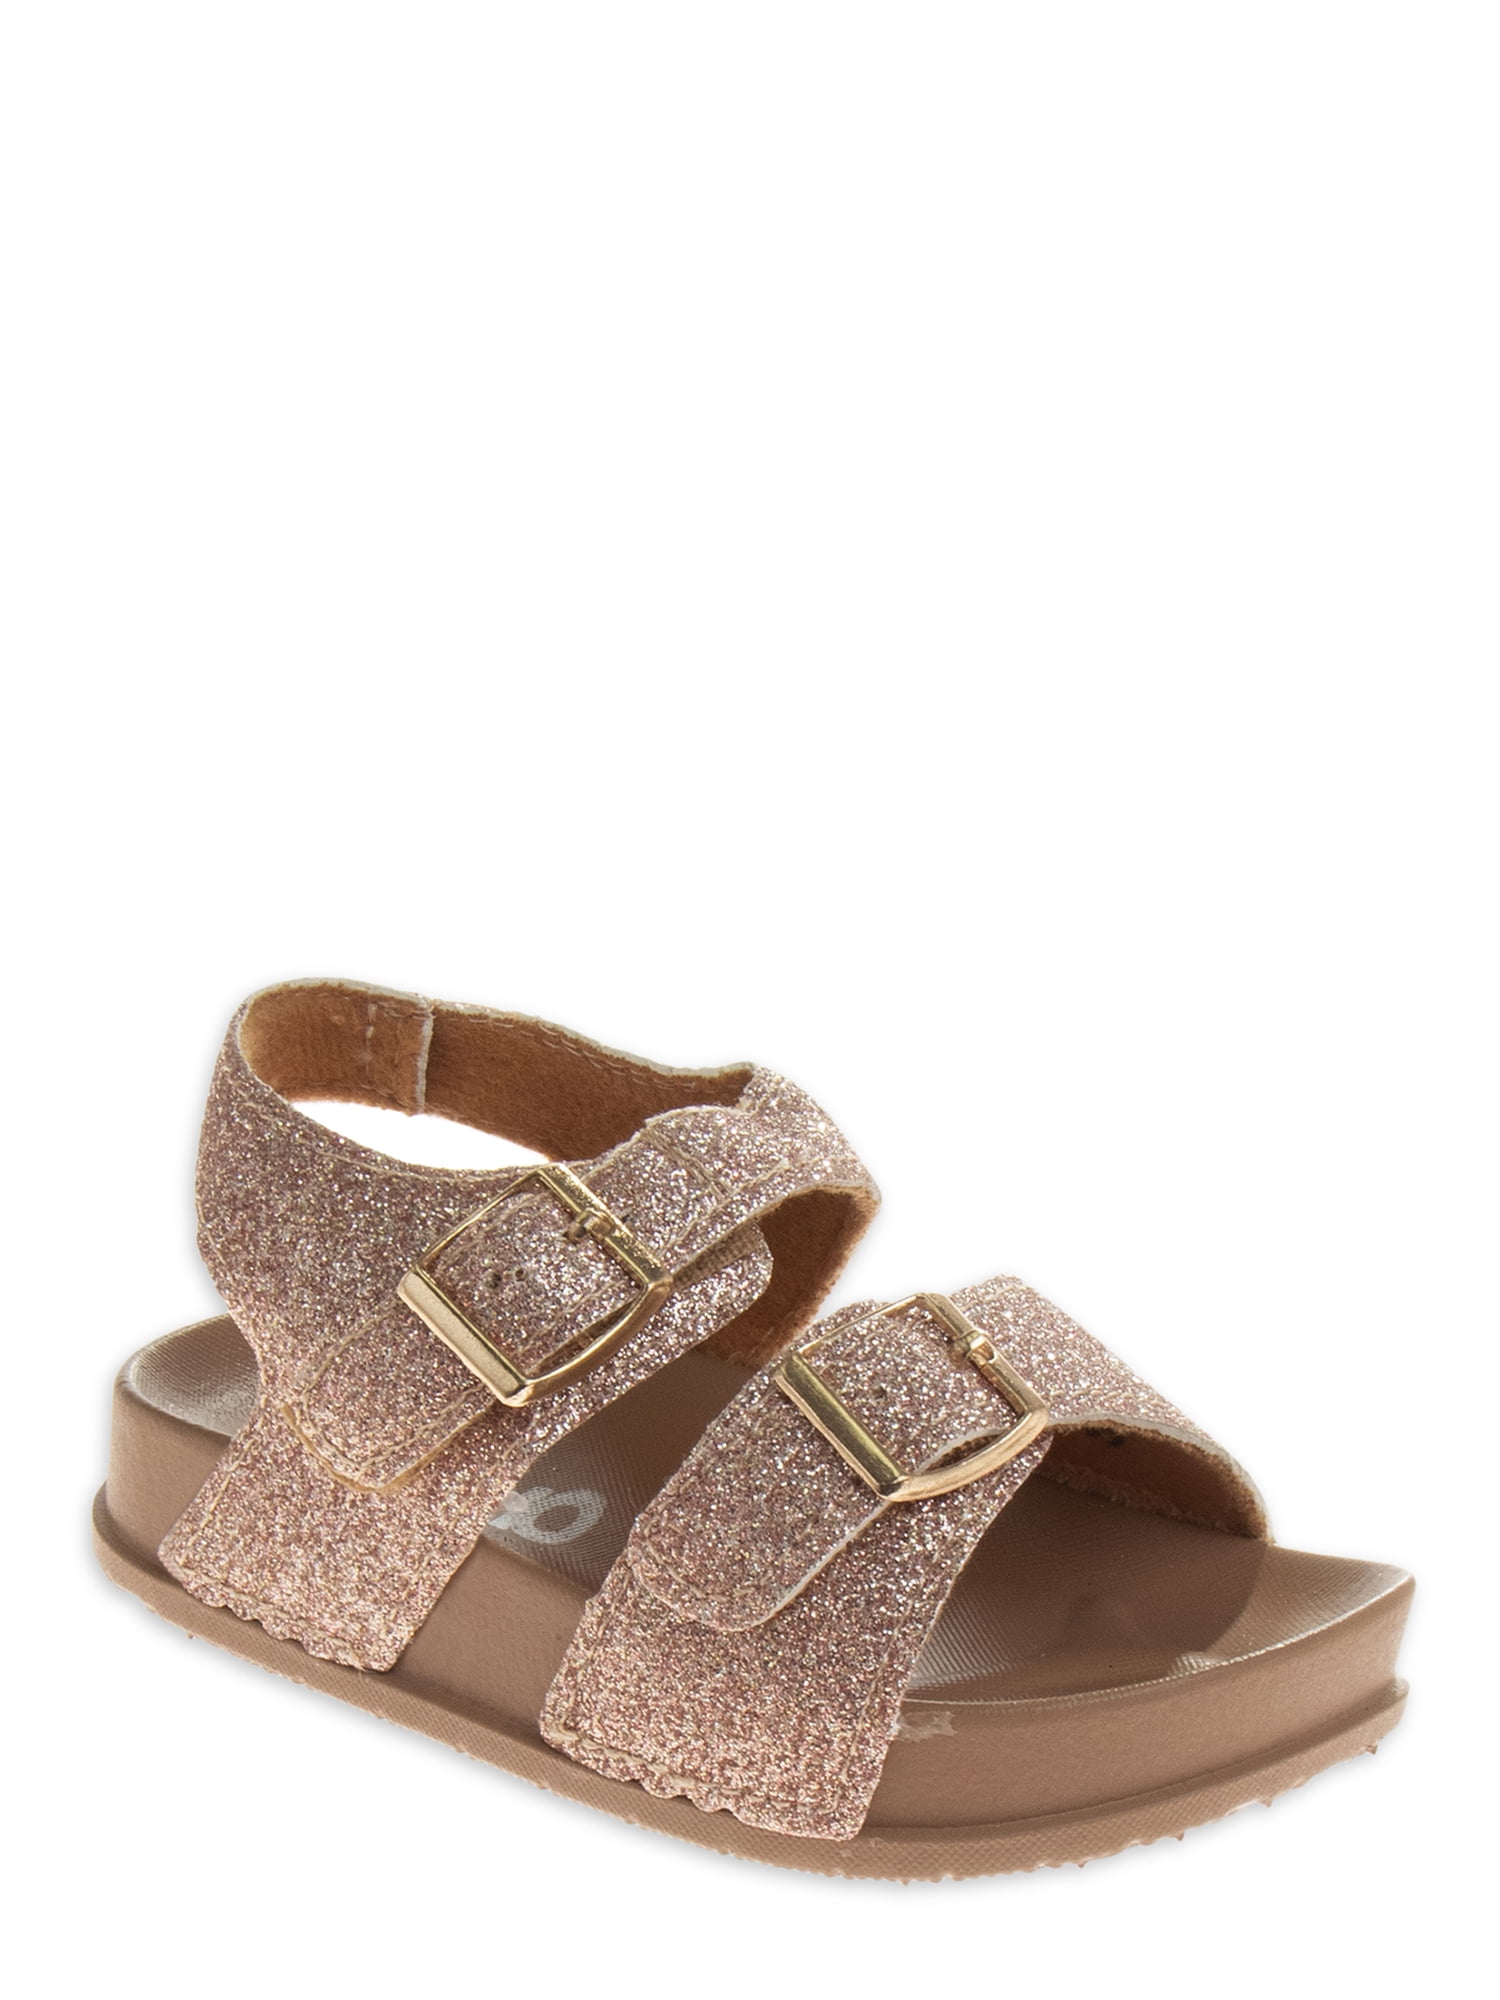 Josmo Girls Double Strap Glitter Footbed Sandals, Sizes 5-10 - Walmart.com